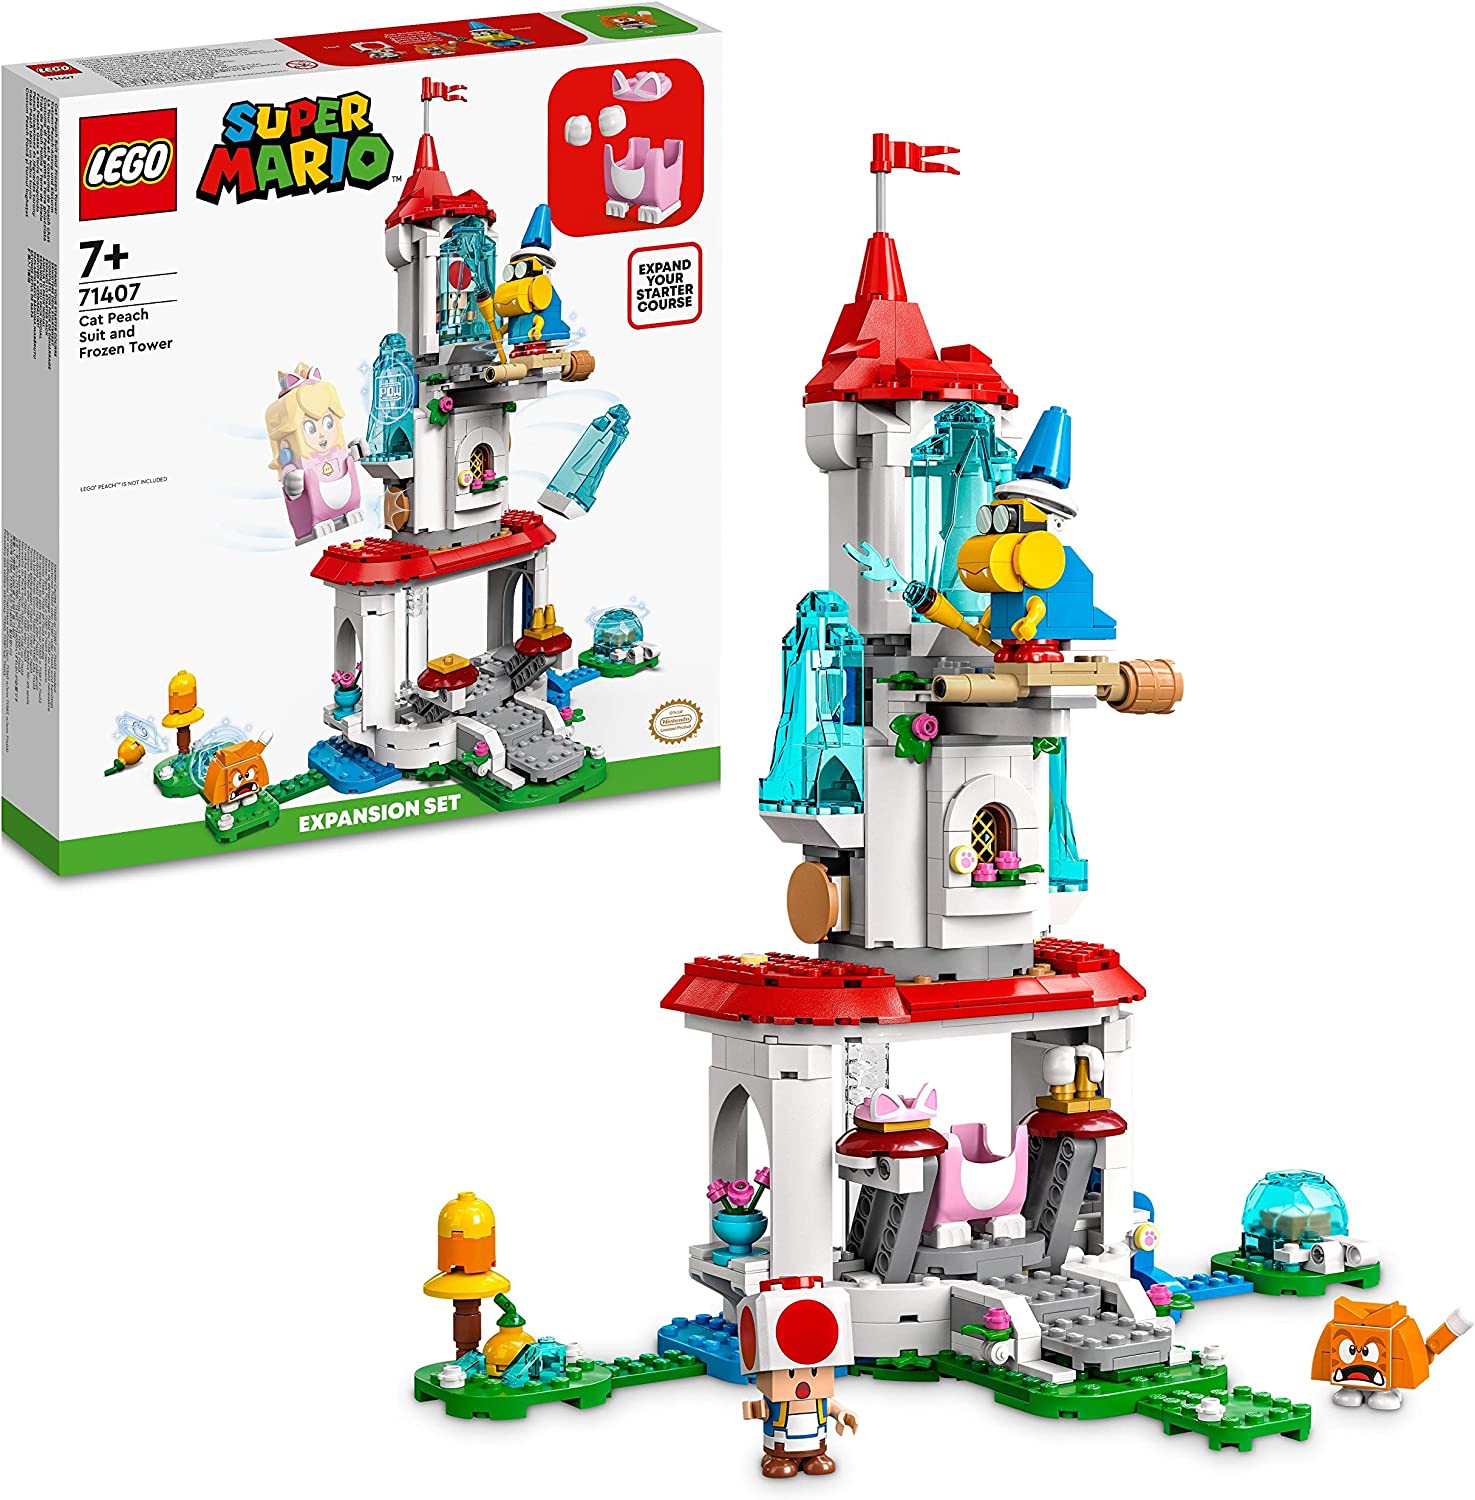 Lego Super Mario Cat Peach y Frozen Tower Set 